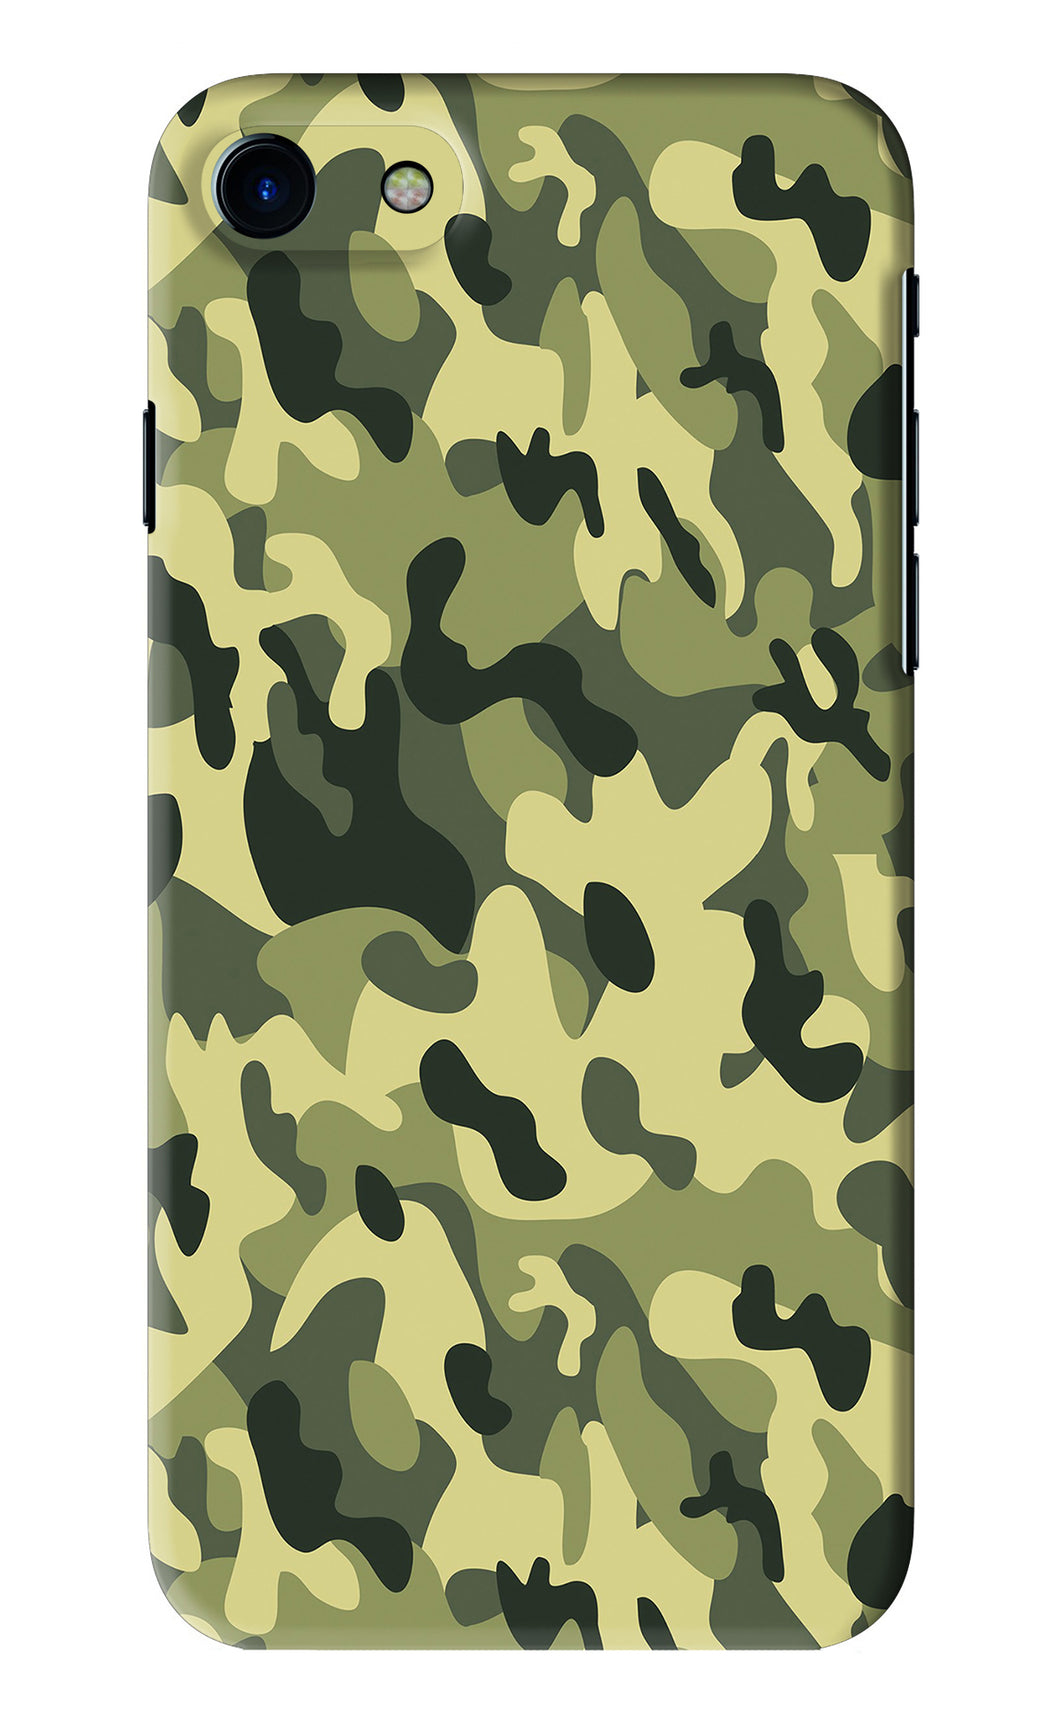 Camouflage iPhone 7 Back Skin Wrap